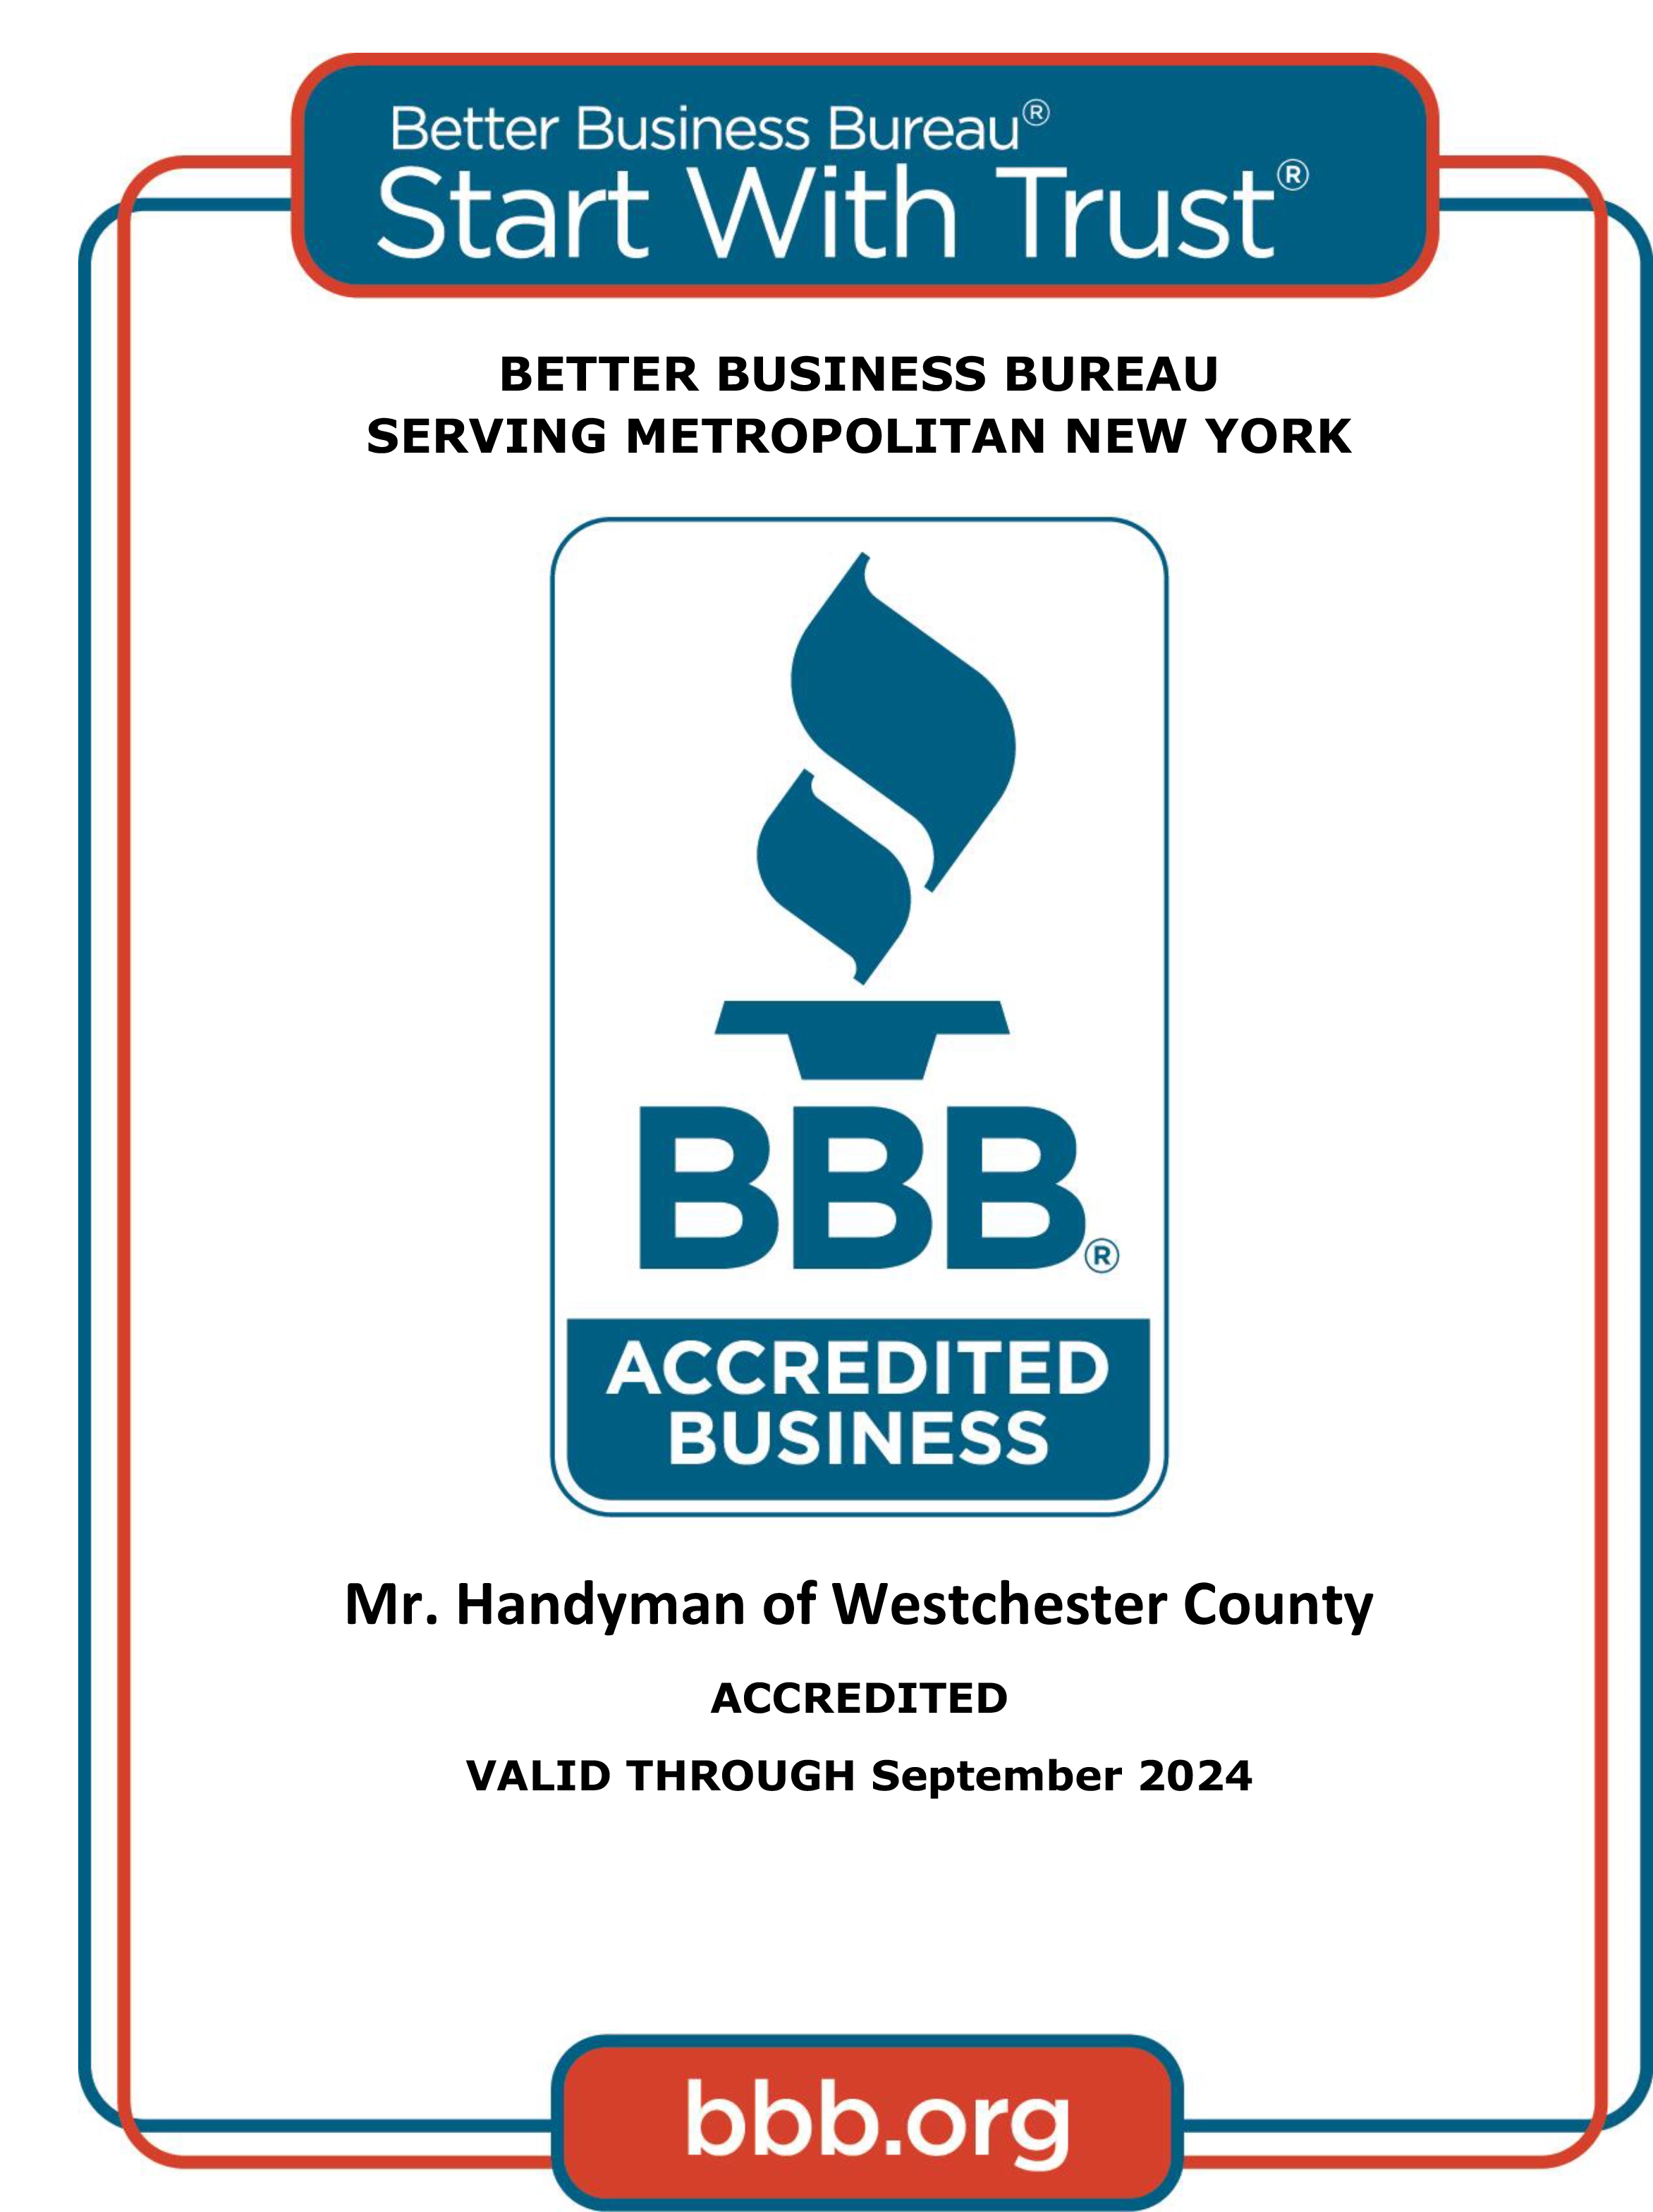 Better Business Bureau Accreditation.